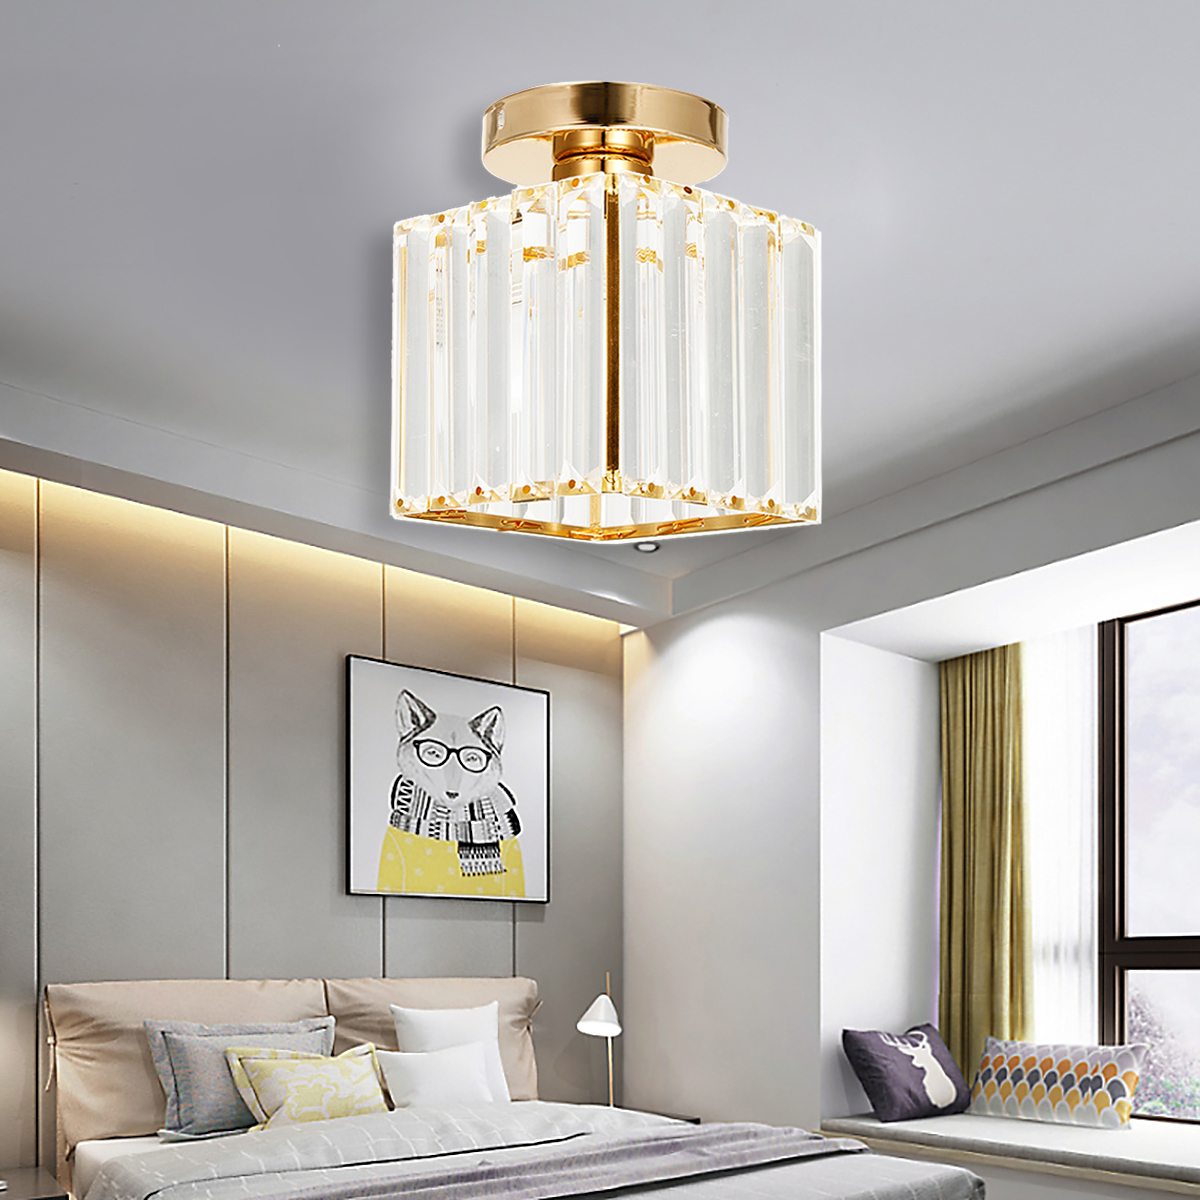 

E27 Modern Pendant Light Ceiling Lamp Hallway Bedroom Home Bar Fixture Decor